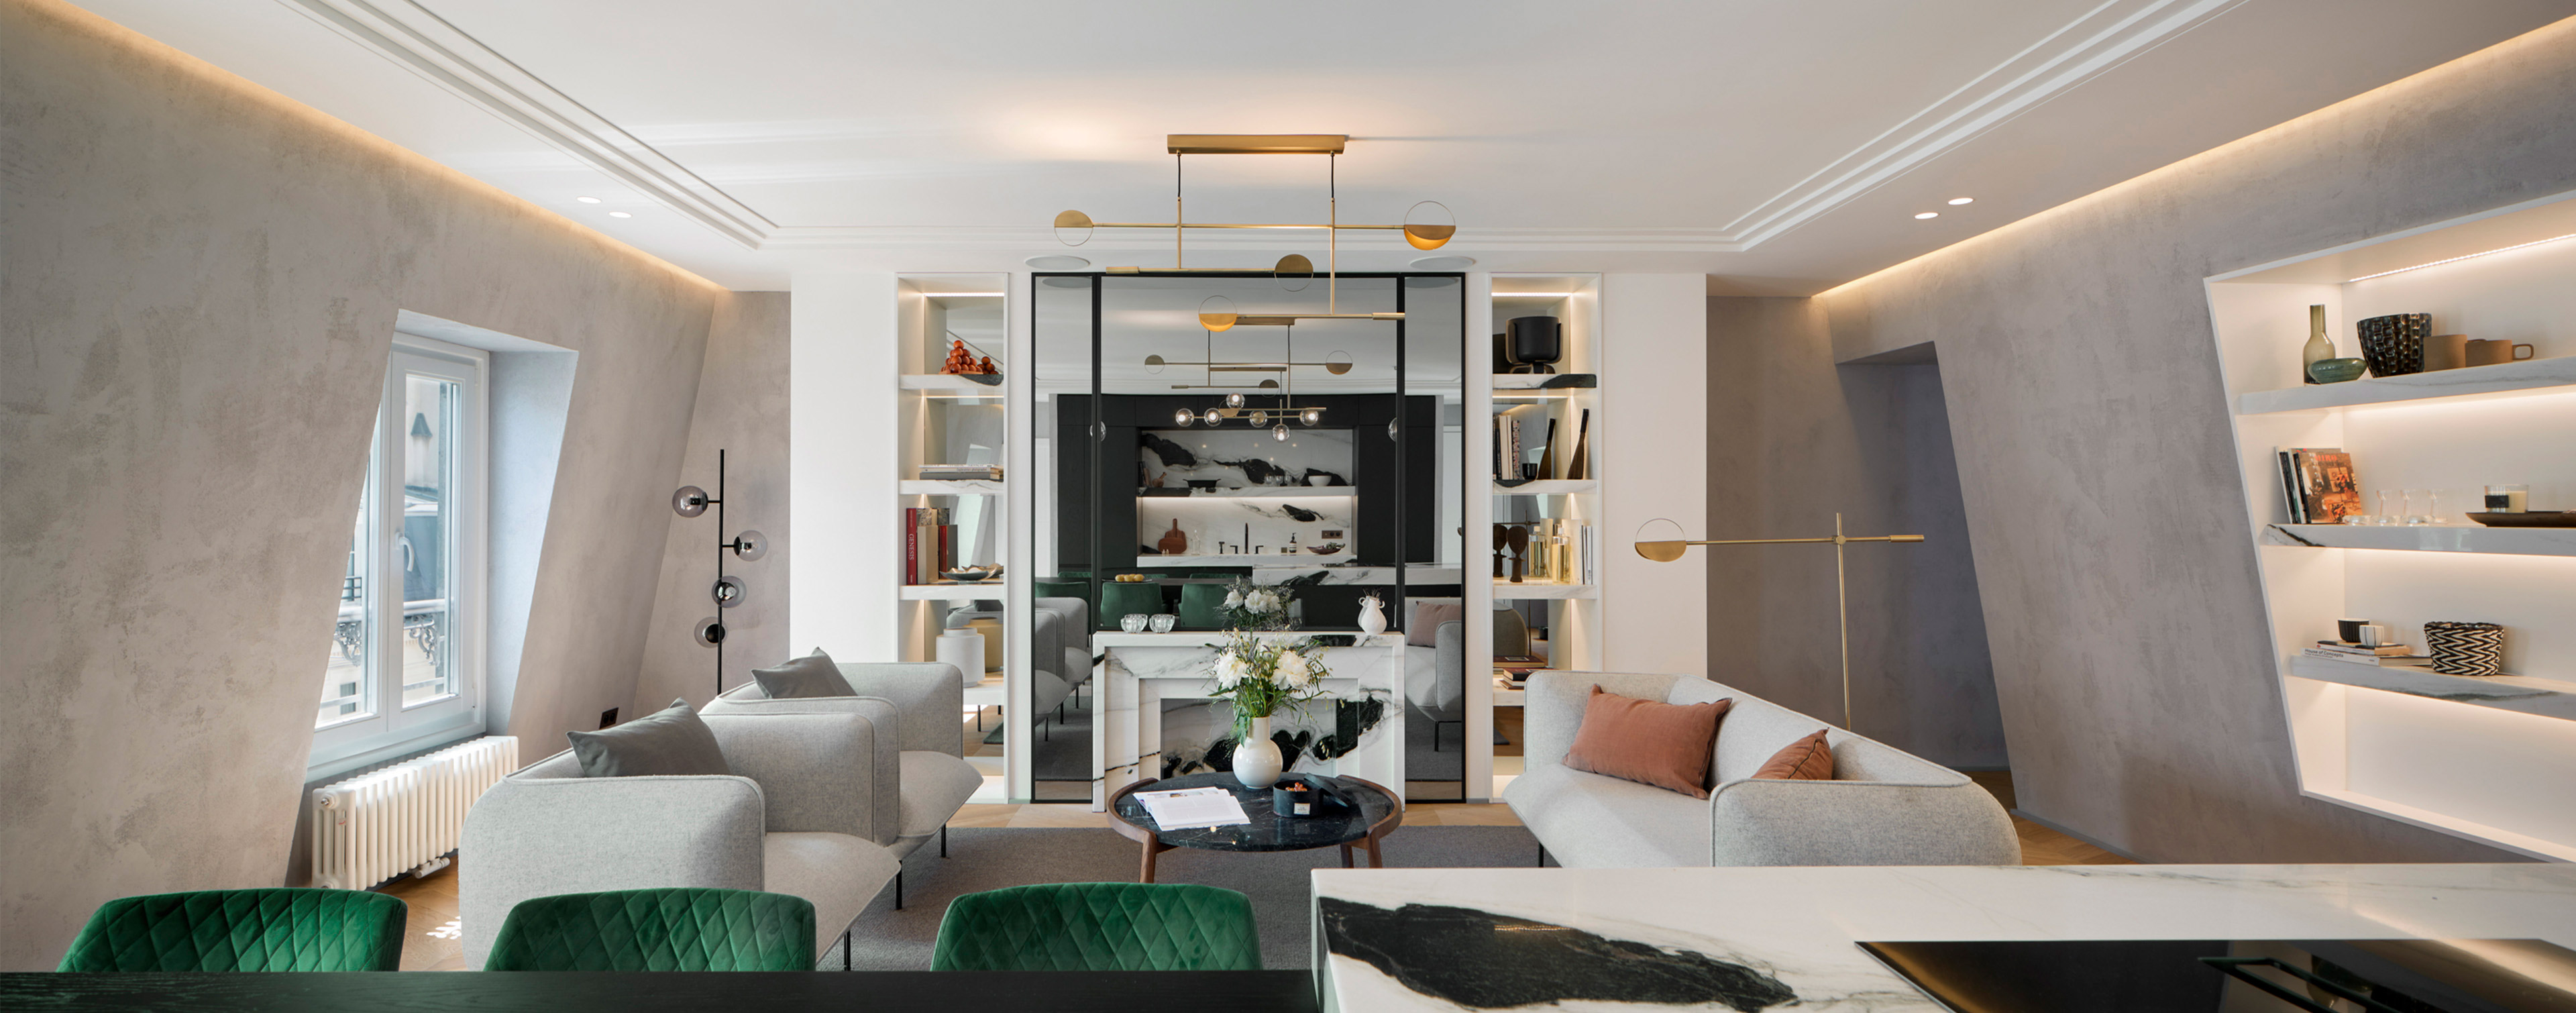 luv studio luxury architects paris chateaubriand apartment IMG 01 - LUV Studio - Arquitectura y diseño - Barcelona